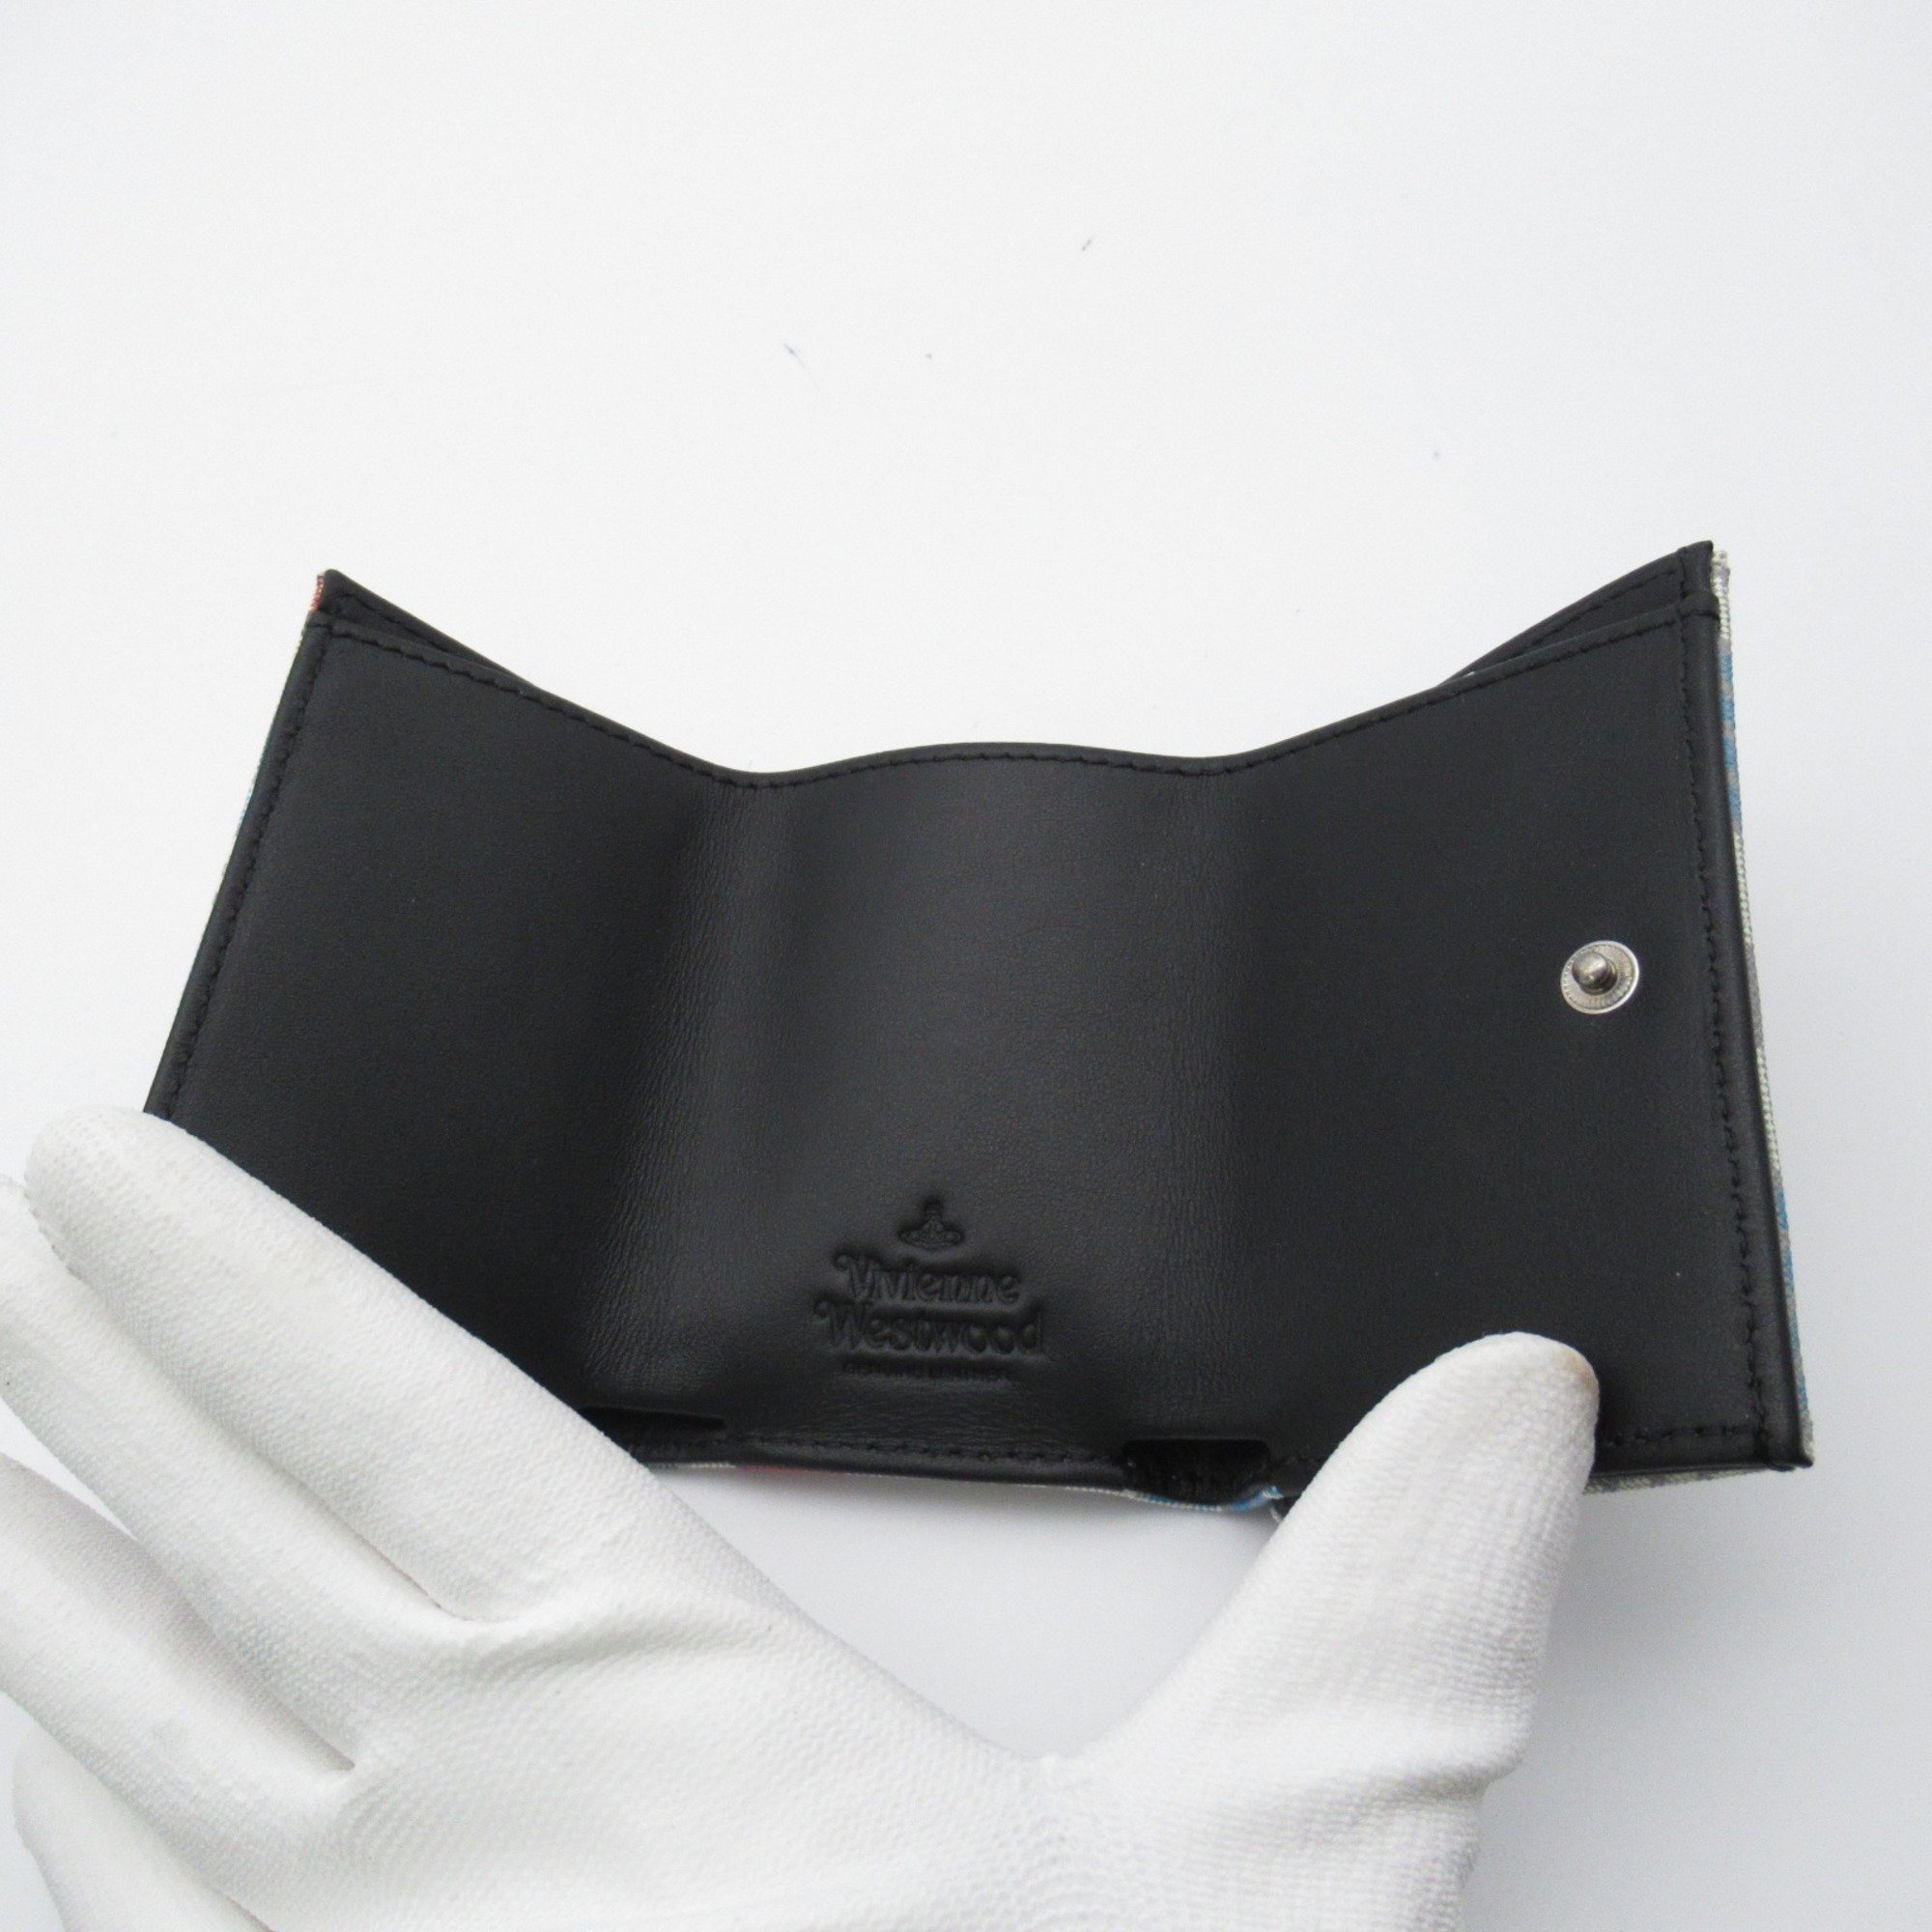 Vivienne Westwood Three-fold wallet White madras check Safiano leather Saffiano print 51150009UL0057O101